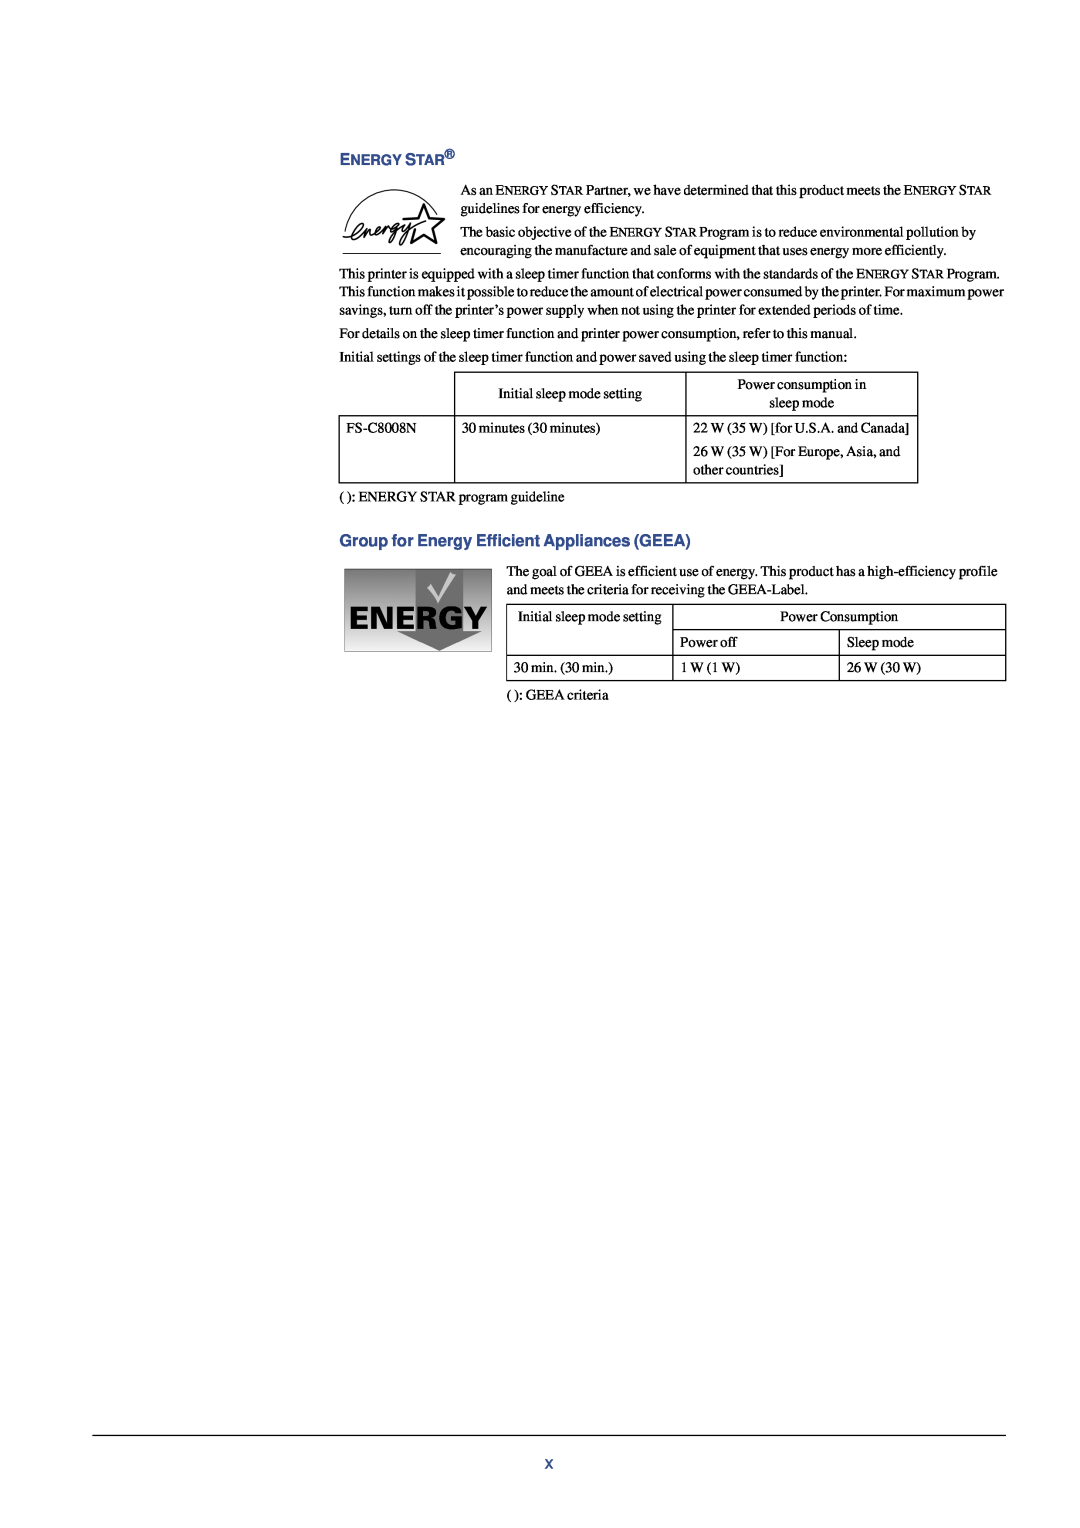 Xerox FS-C8008N, FS-C8008DN manual Group for Energy Efficient Appliances GEEA, Energy Star 